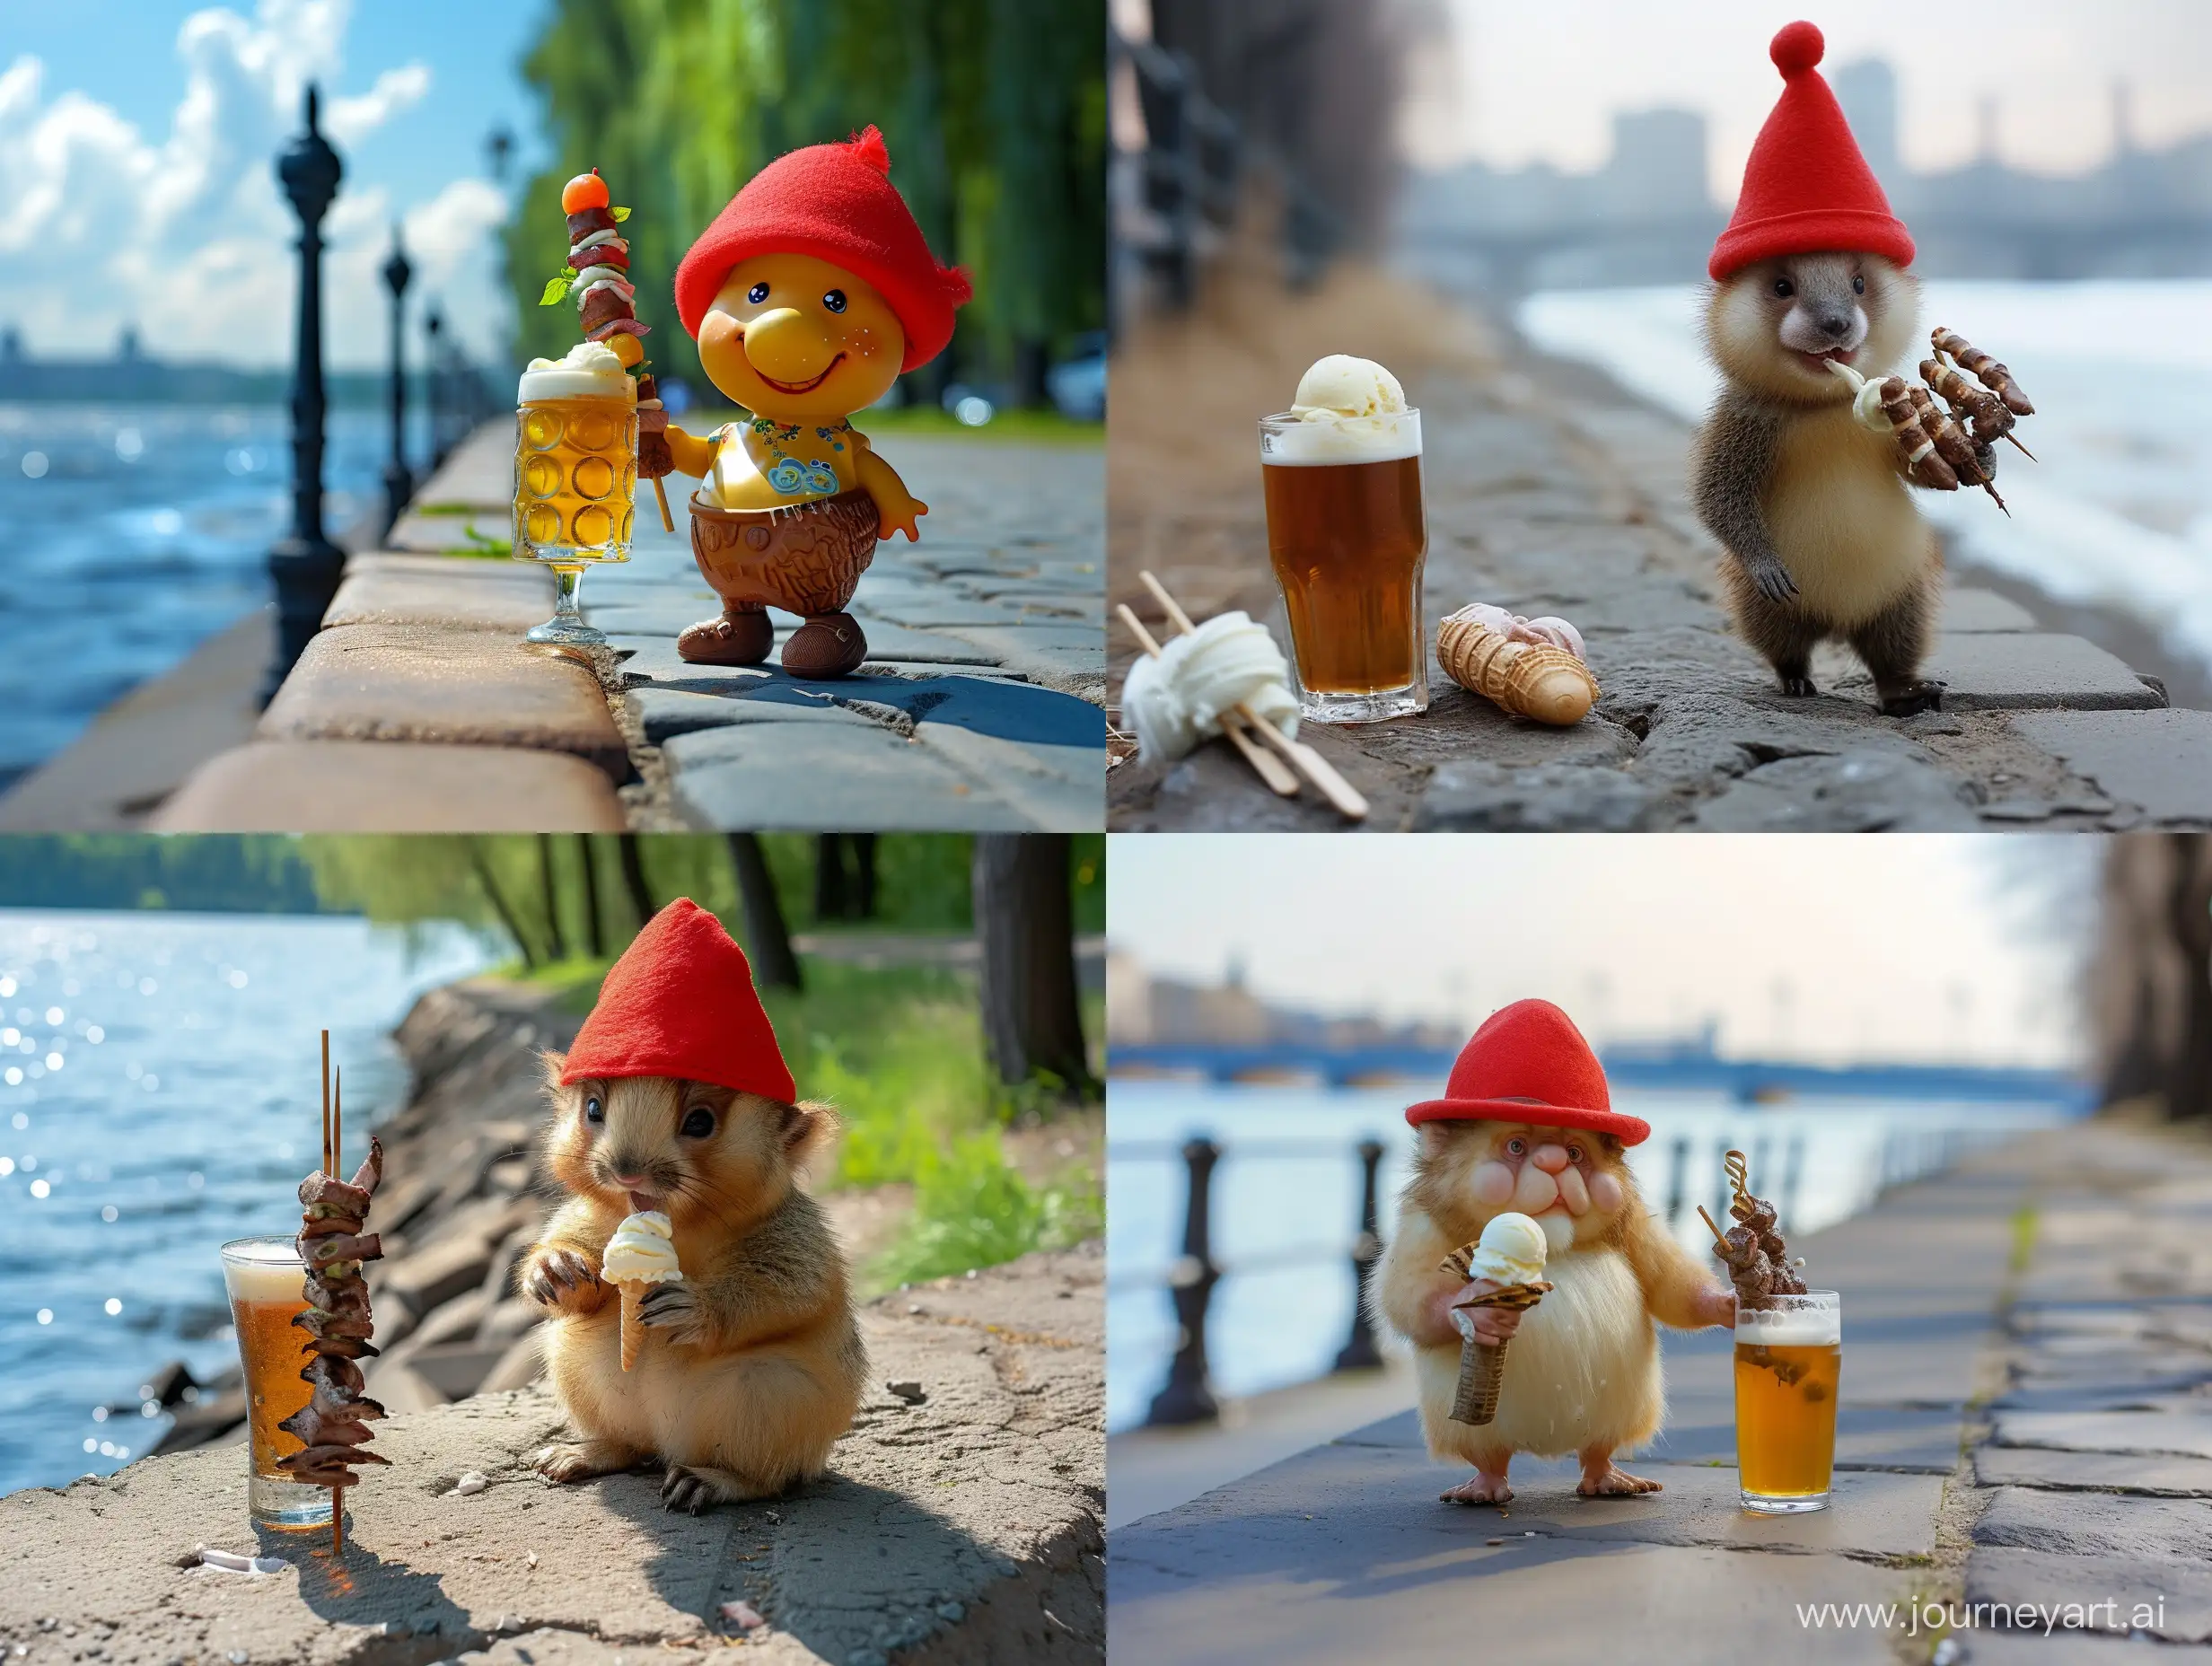 Cheburashka-Strolls-by-the-Embankment-in-a-Red-Hat-Enjoying-Ice-Cream-Shashlik-and-Beer